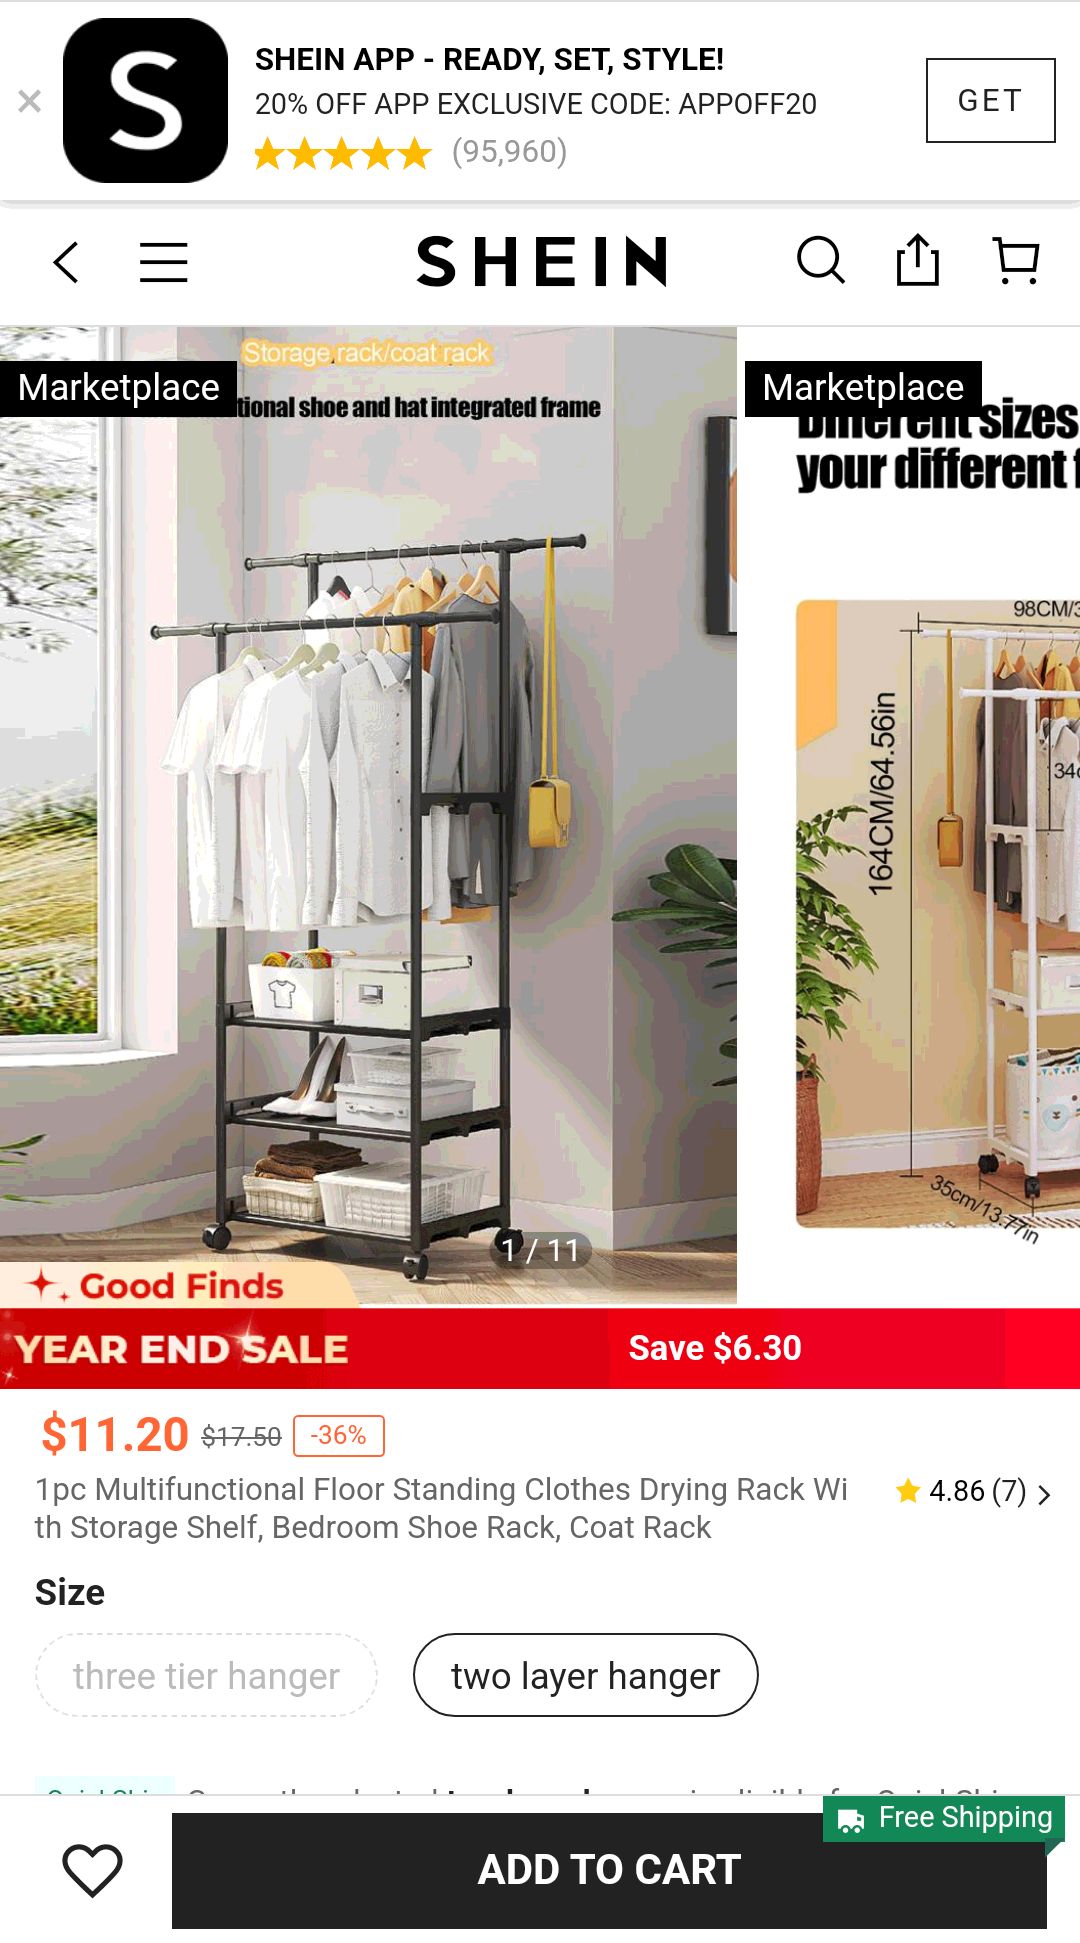 1pc Multifunctional Floor Standing Clothes Drying Rack With Storage Shelf, Bedroom Shoe Rack, Coat Rack | SHEIN USA